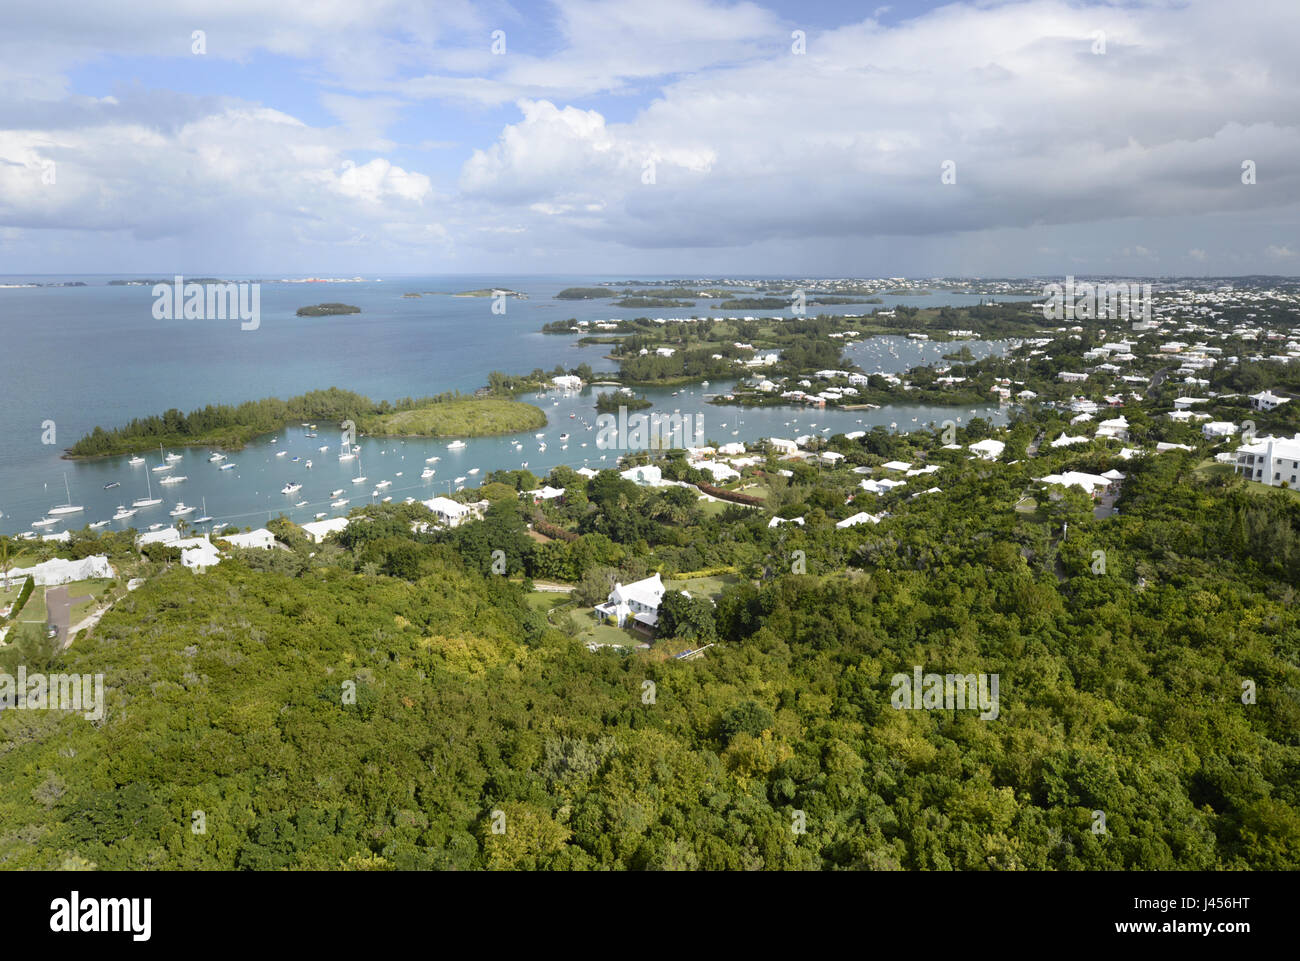 View over Great Sound, Bermuda Island, a British island territory in the North Atlantic Ocean. Stock Photo